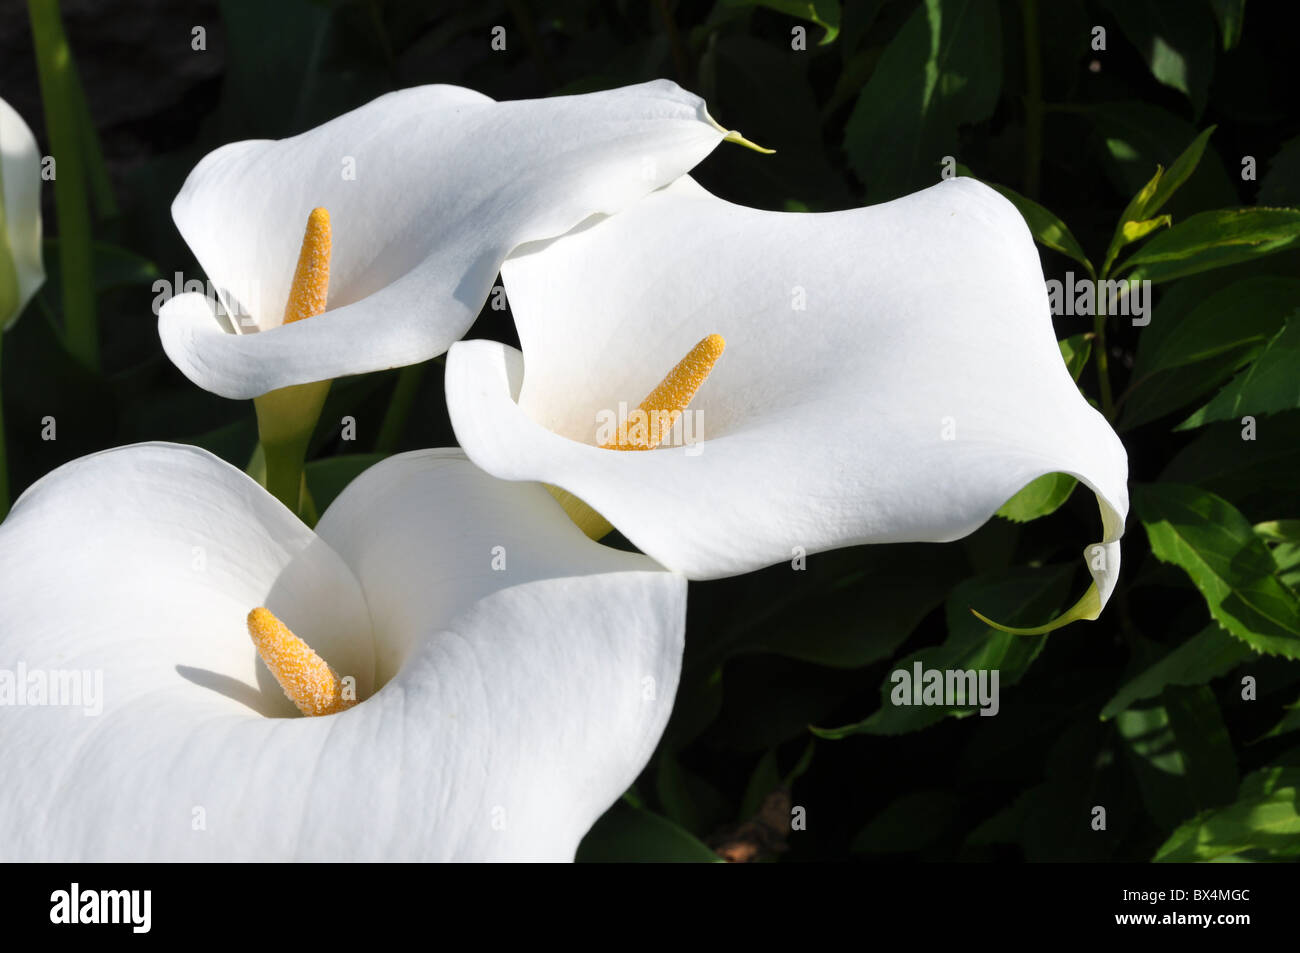 Arum blanc lillies avec spadice jaune Banque D'Images